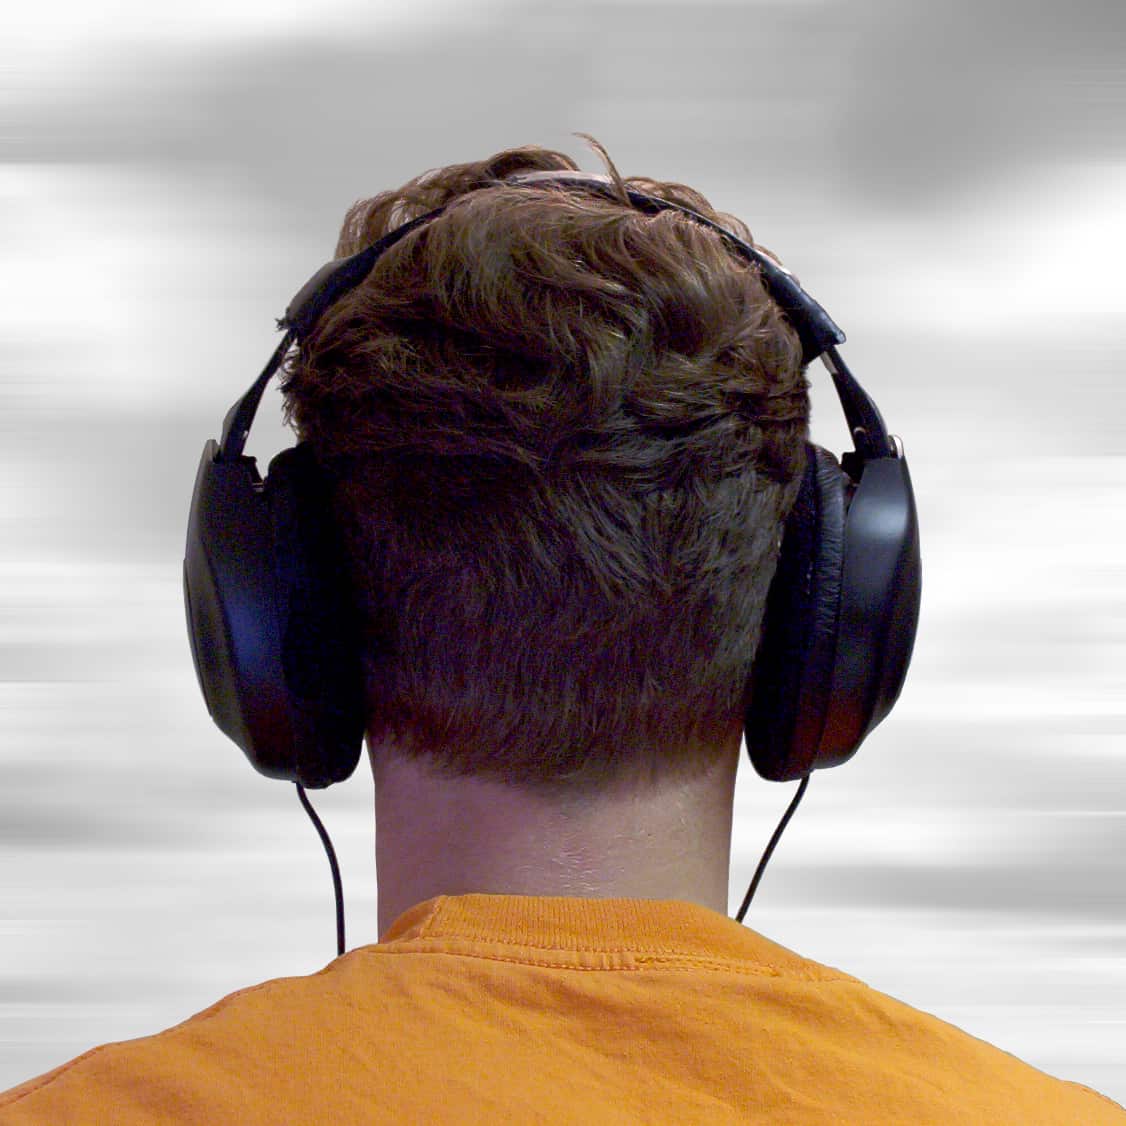 A man wearing headphones